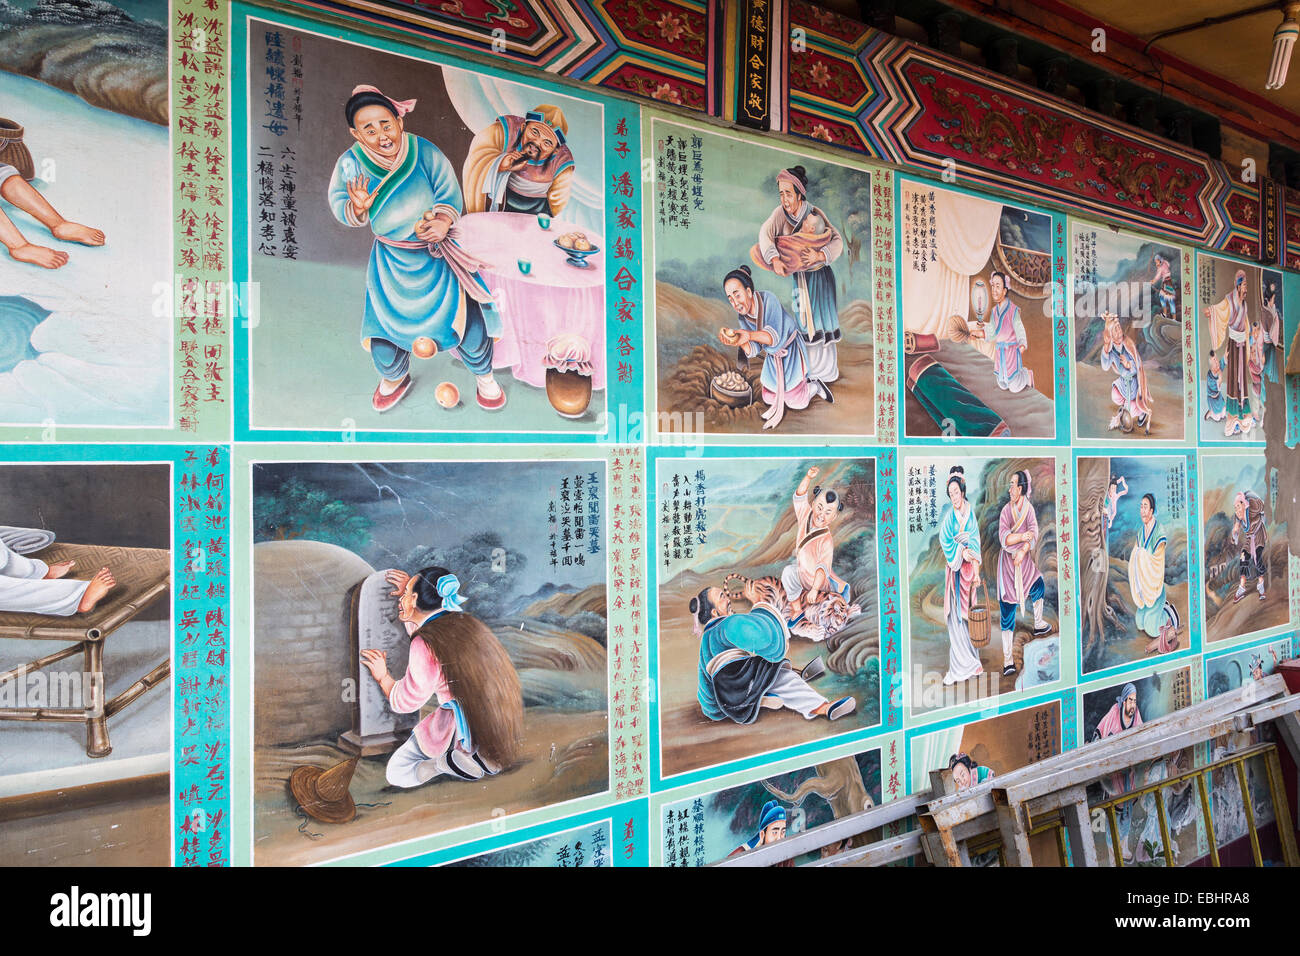 Panel de historia en chino en el muro del templo chino Tua Pek Kong, Miri, Sarawak, Malasia Foto de stock